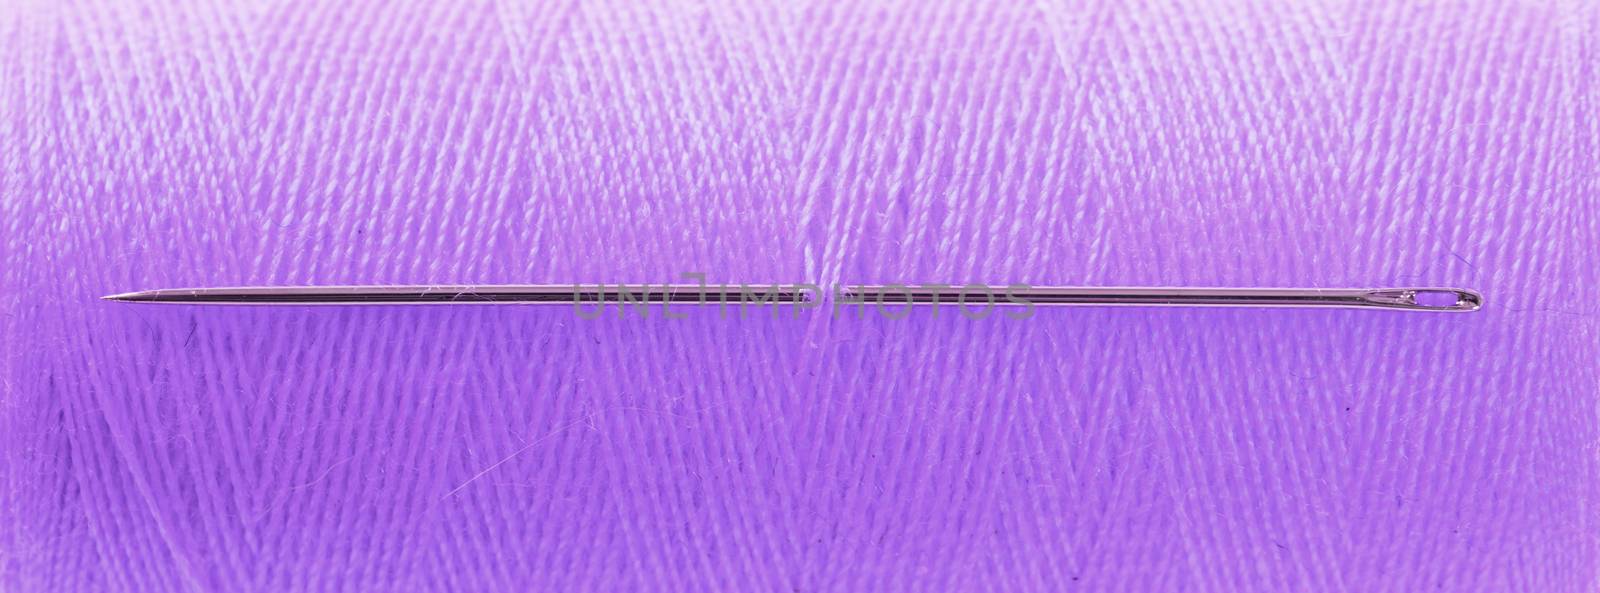 Purple threat with needle, full frame, focus on needle